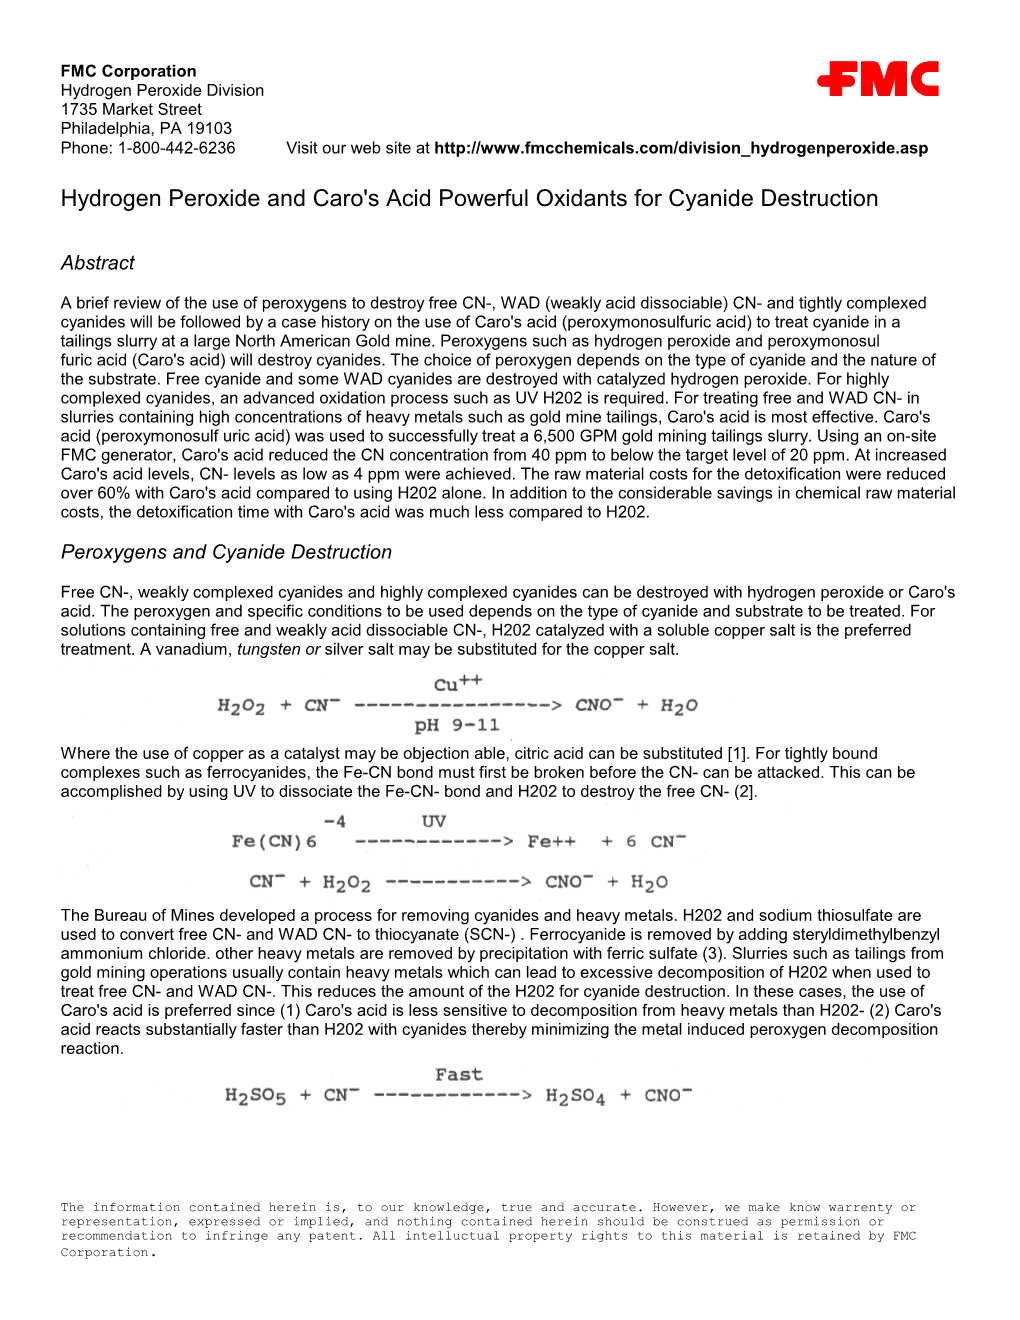 Hydrogen Peroxide and Caro's Acid Powerful Oxidants for Cyanide Destruction